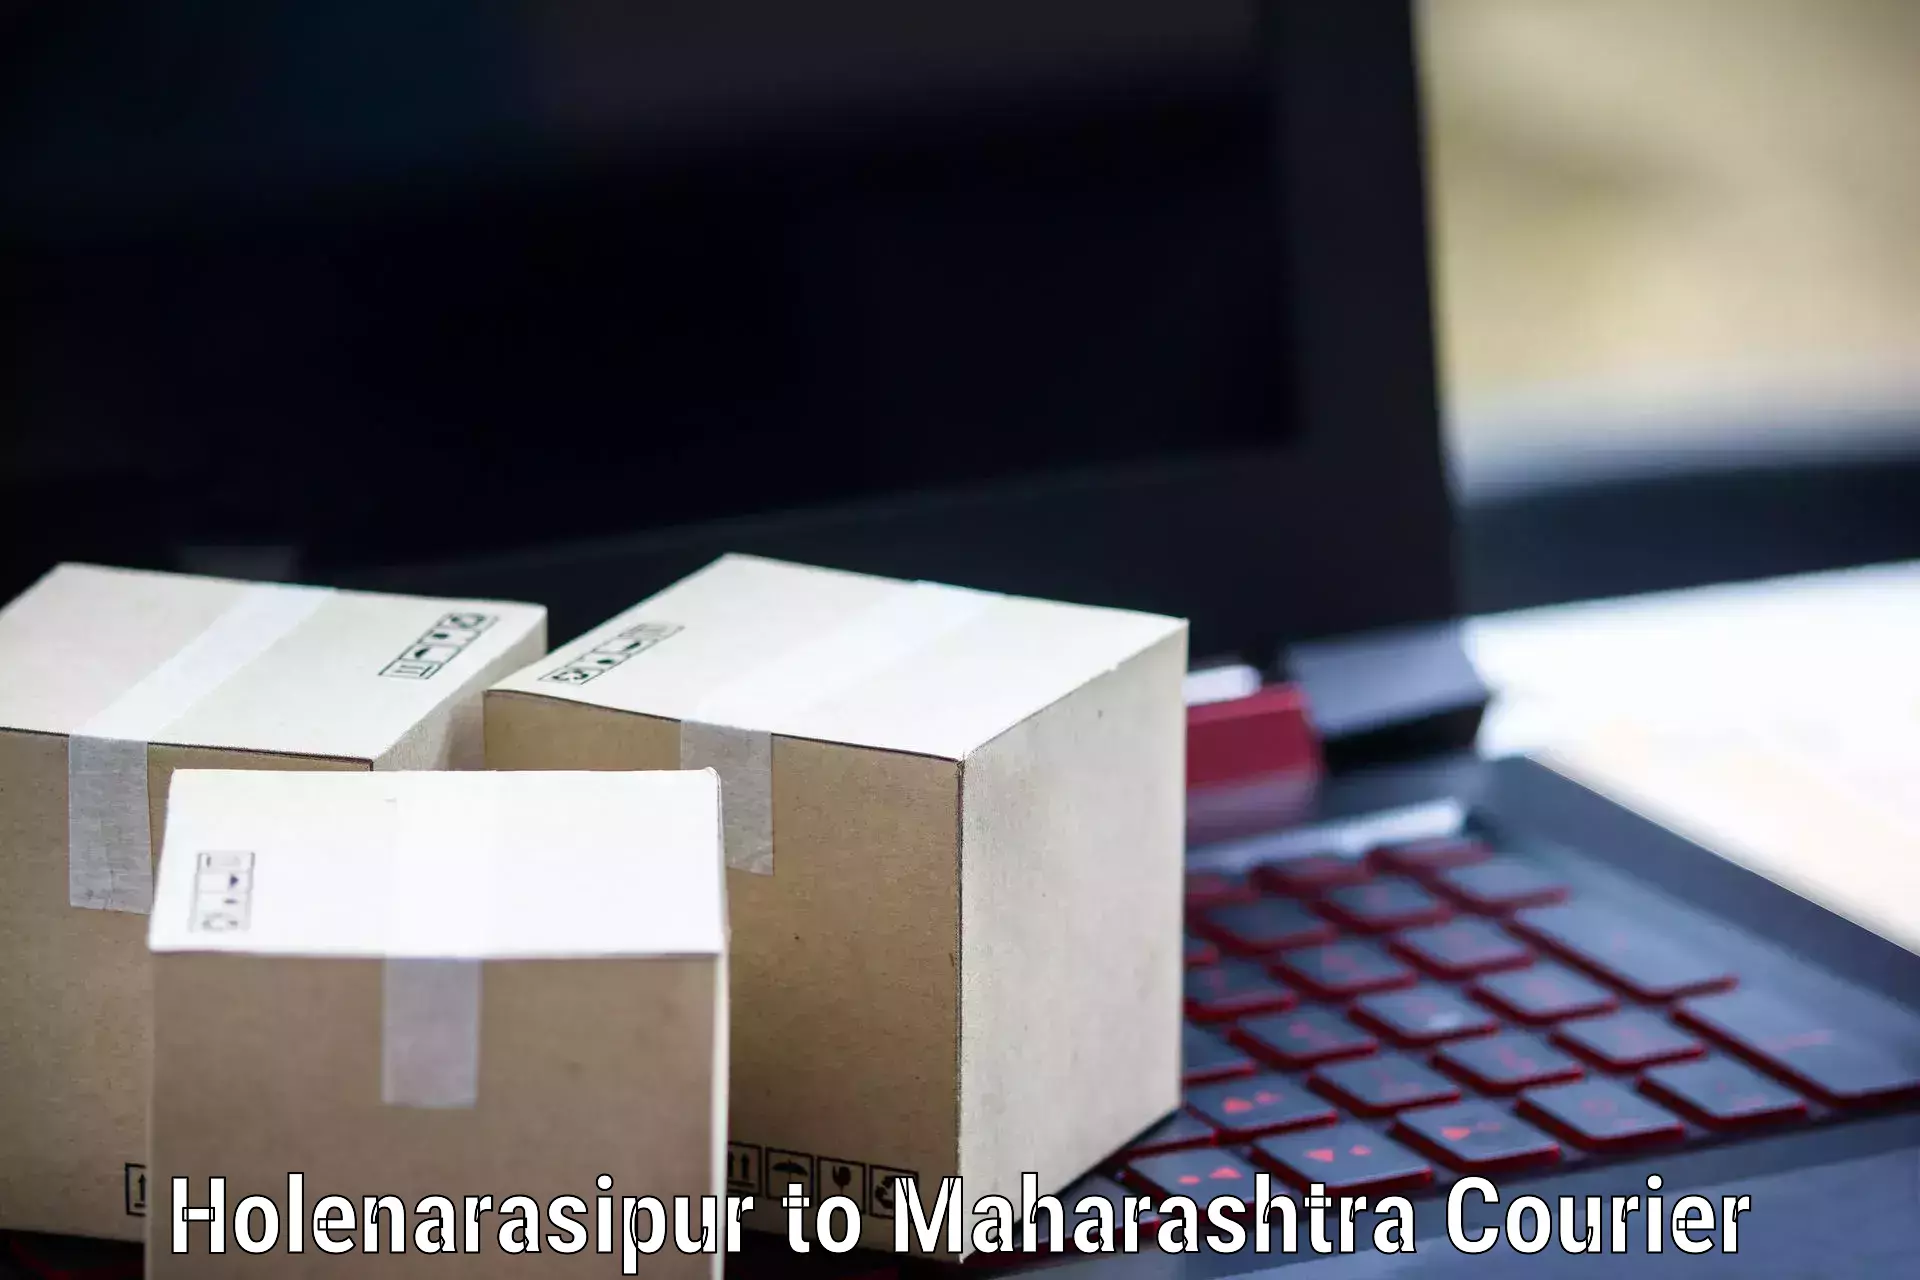 Courier service comparison Holenarasipur to Raigarh Maharashtra